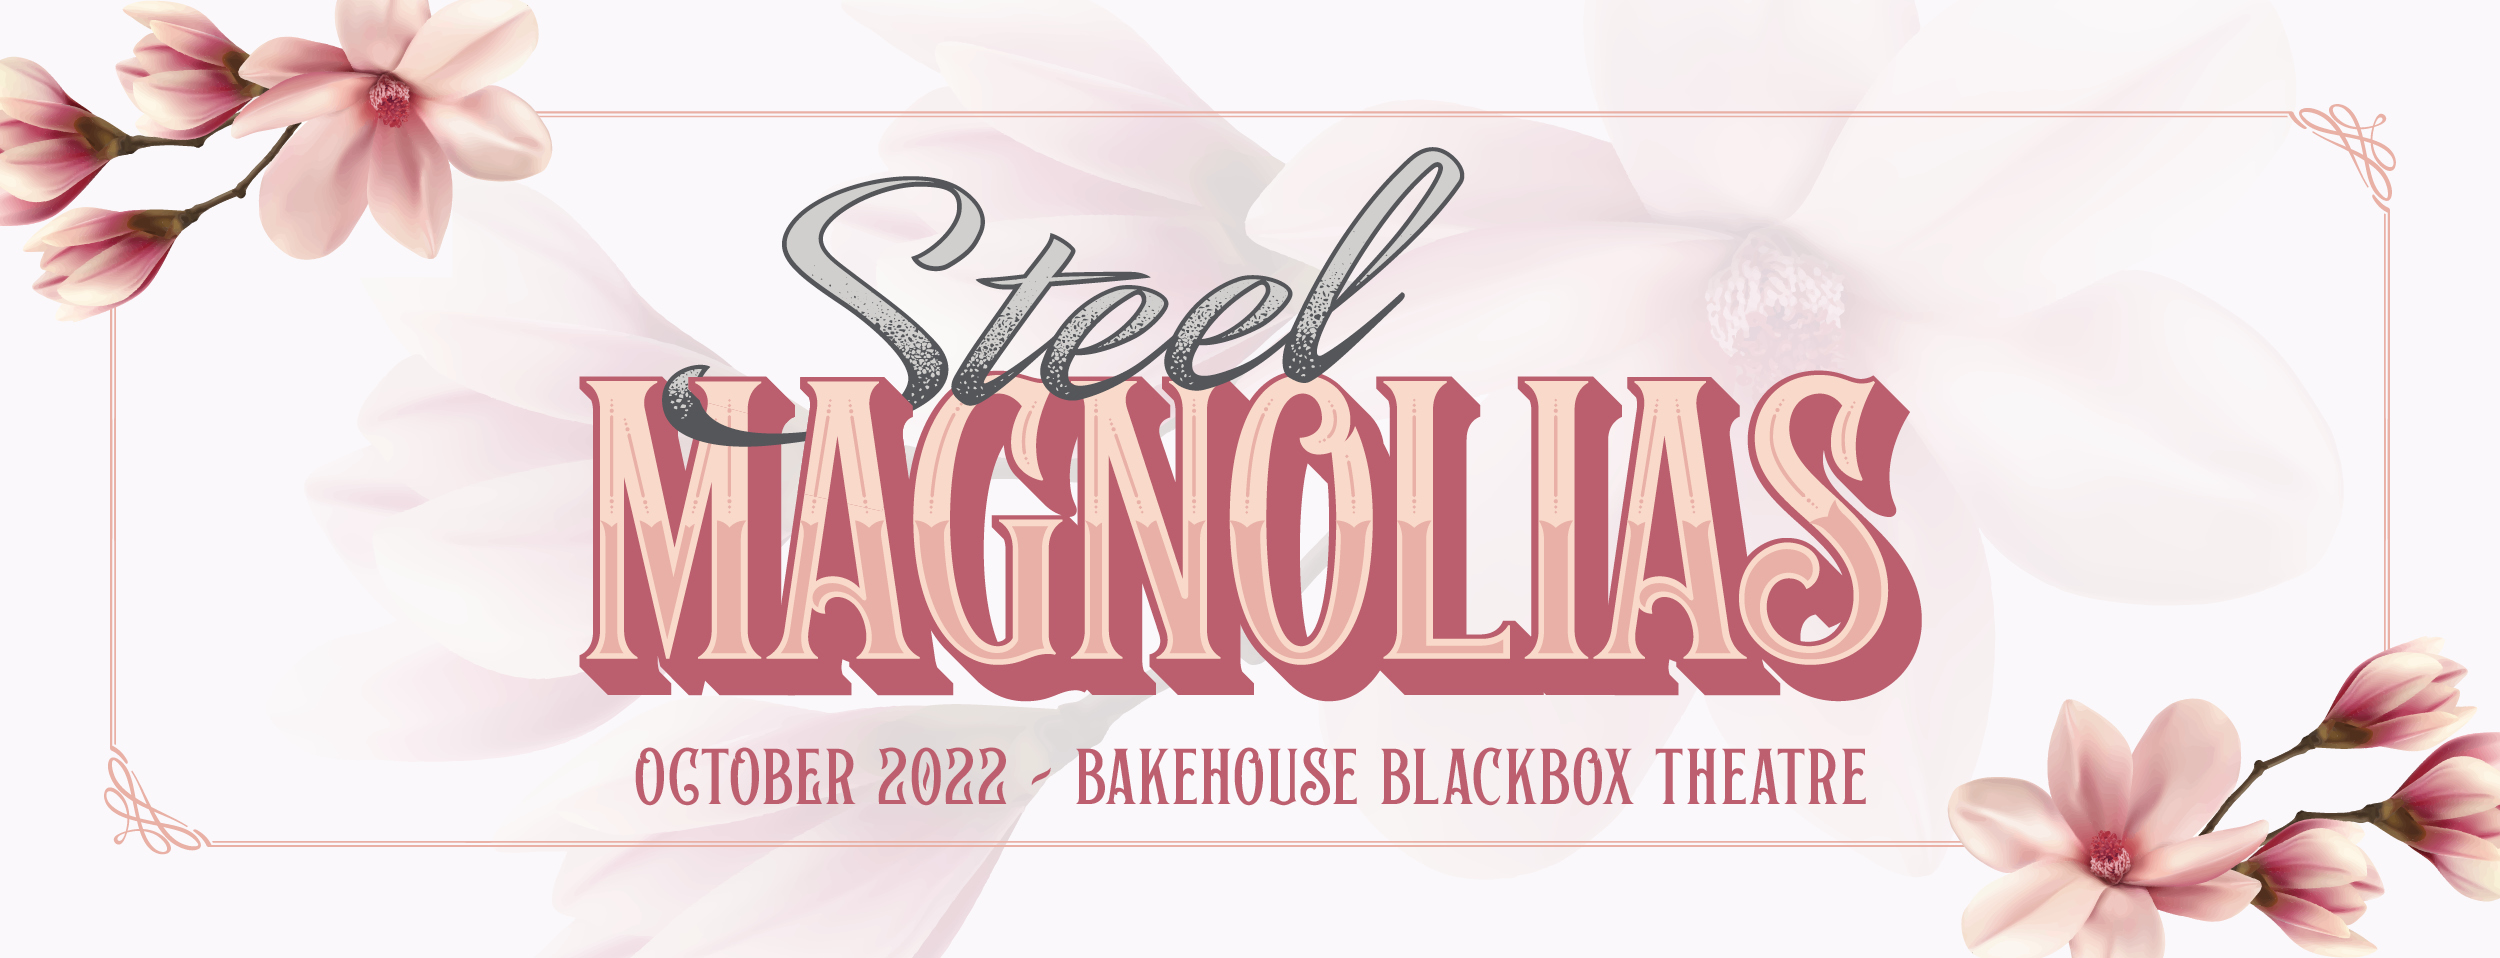 Steel_Magnolias